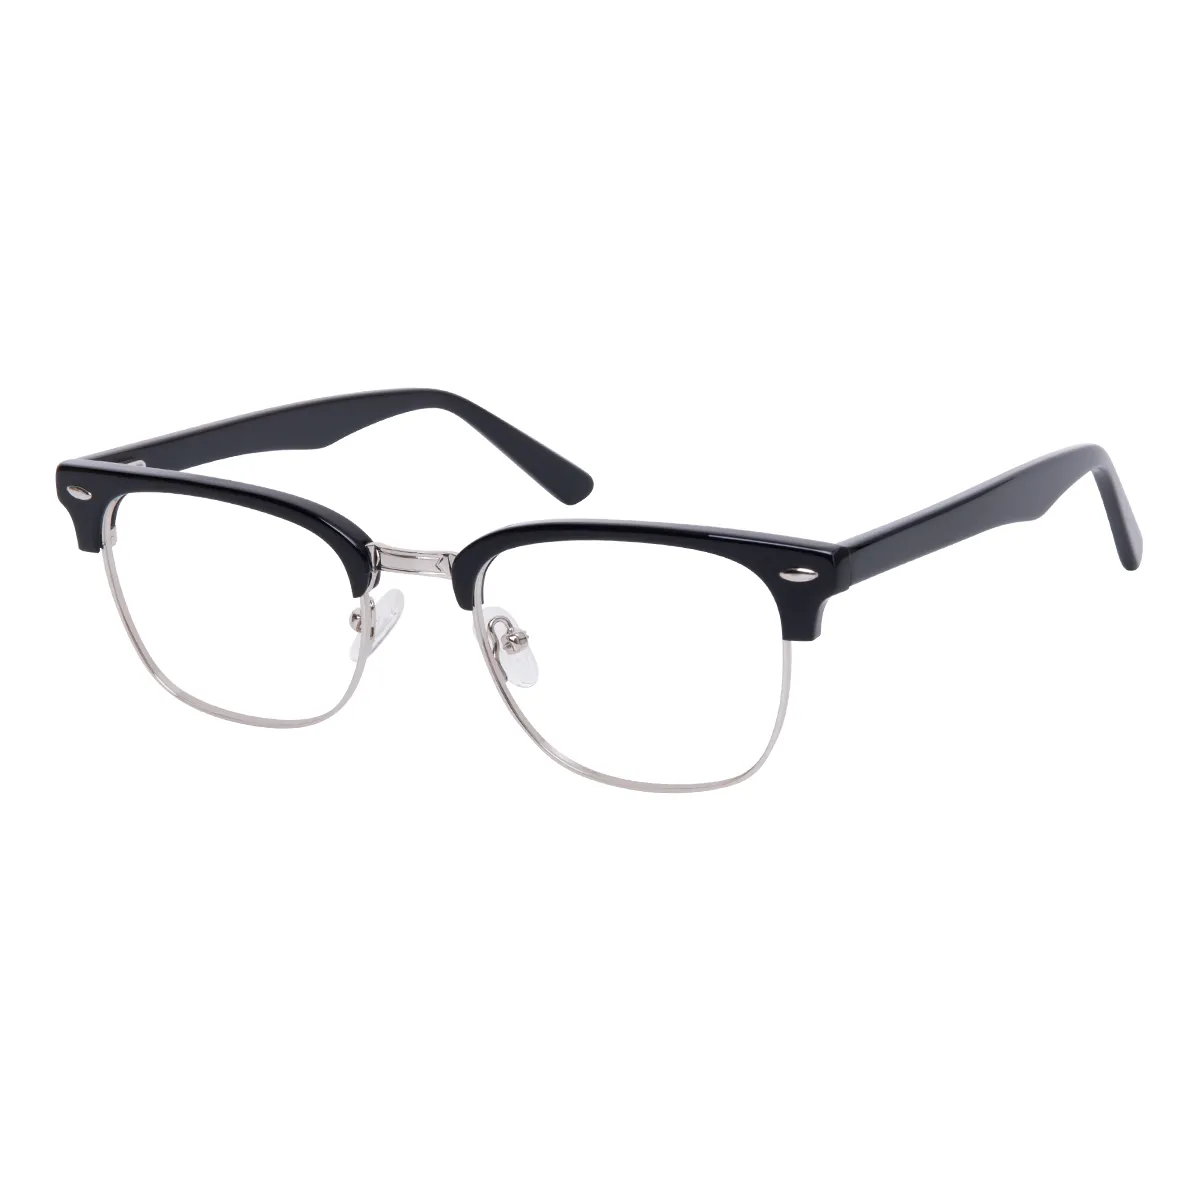 Nathan - Browline Black-Silver Glasses for Men & Women